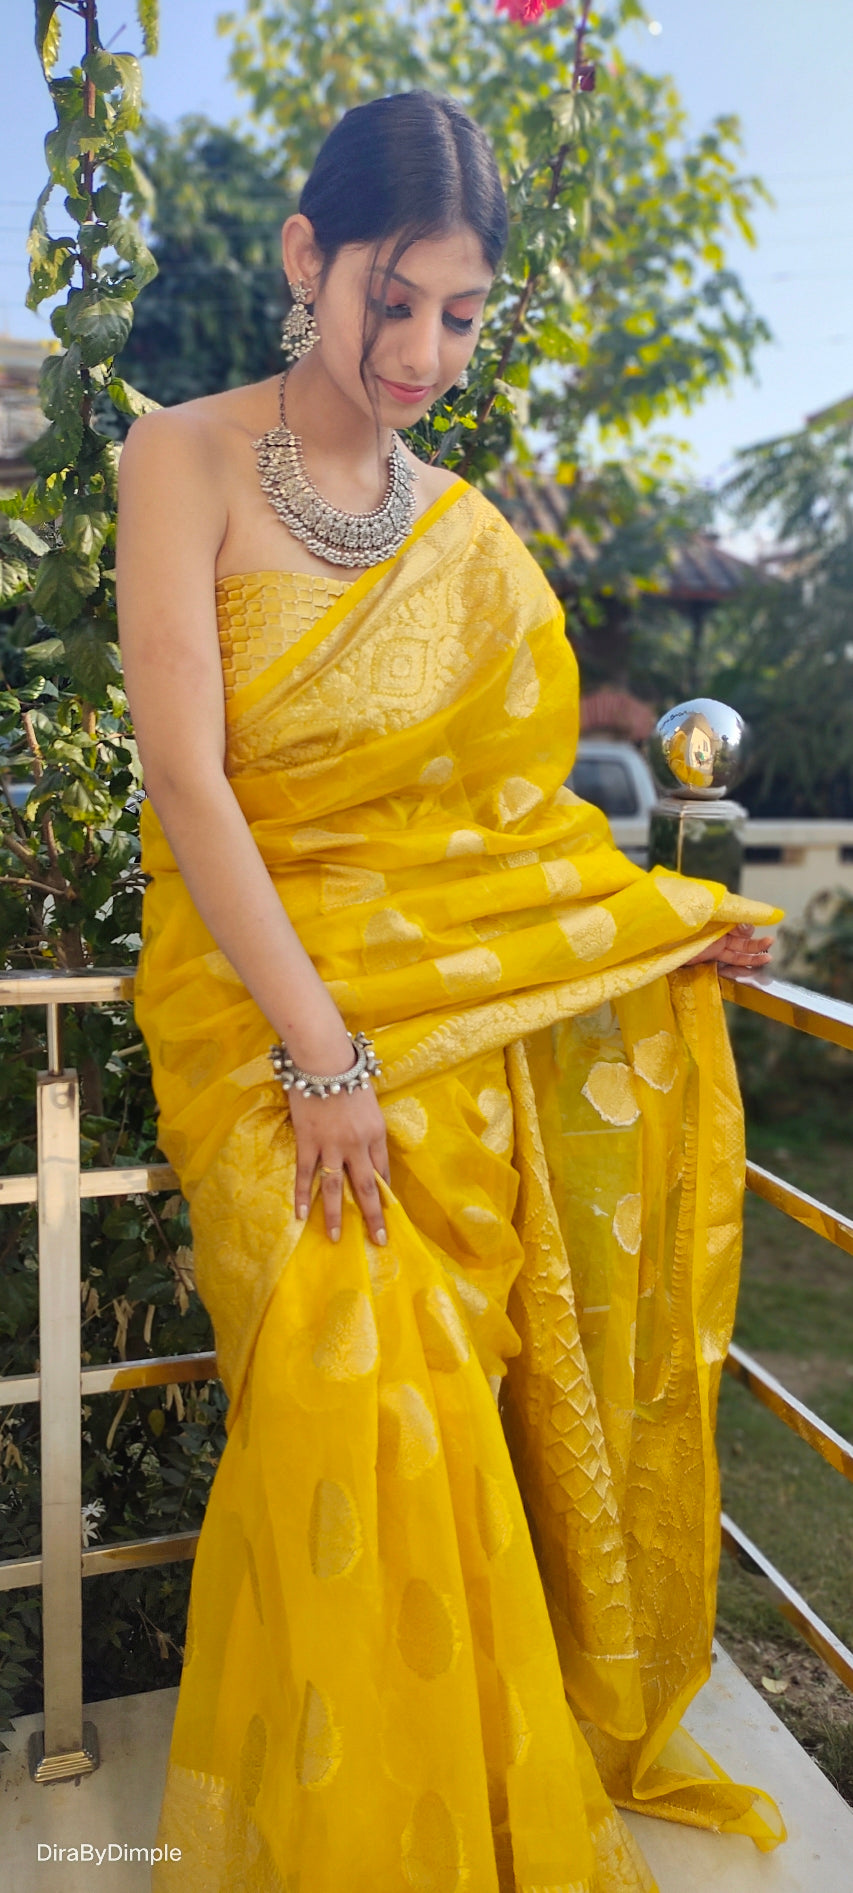 Royal Radiance (Banarasi Silk Organza Saree in Mustard Yellow)